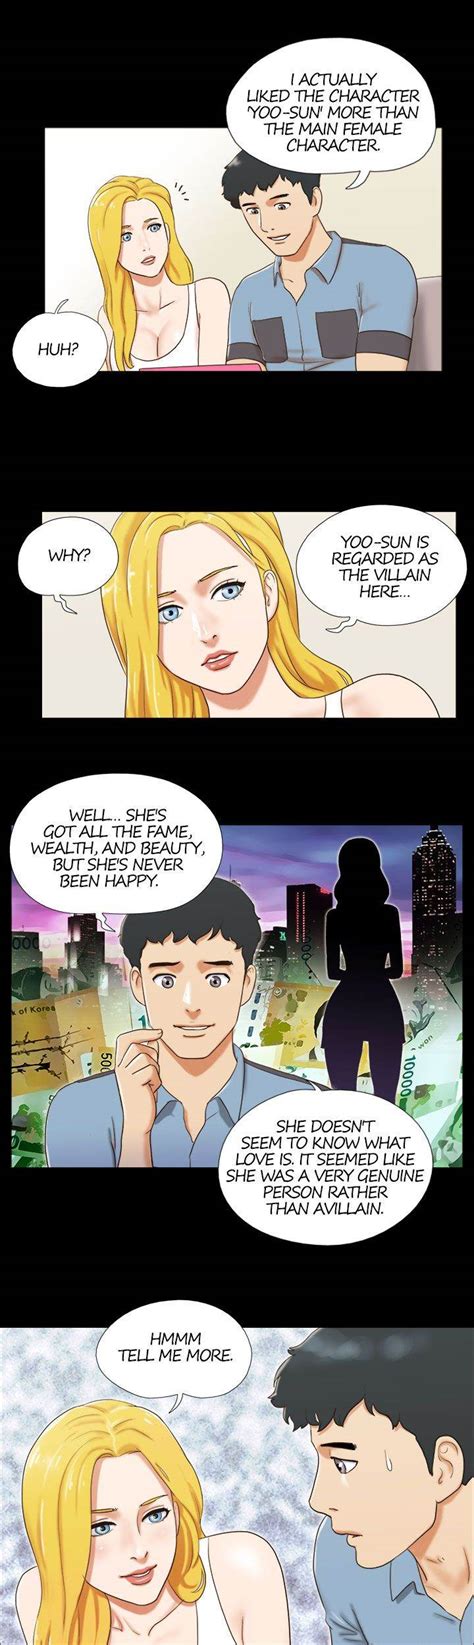 Couple Game 17 Sex Fantasies Ver2 Chapter 14 Read Webtoon 18